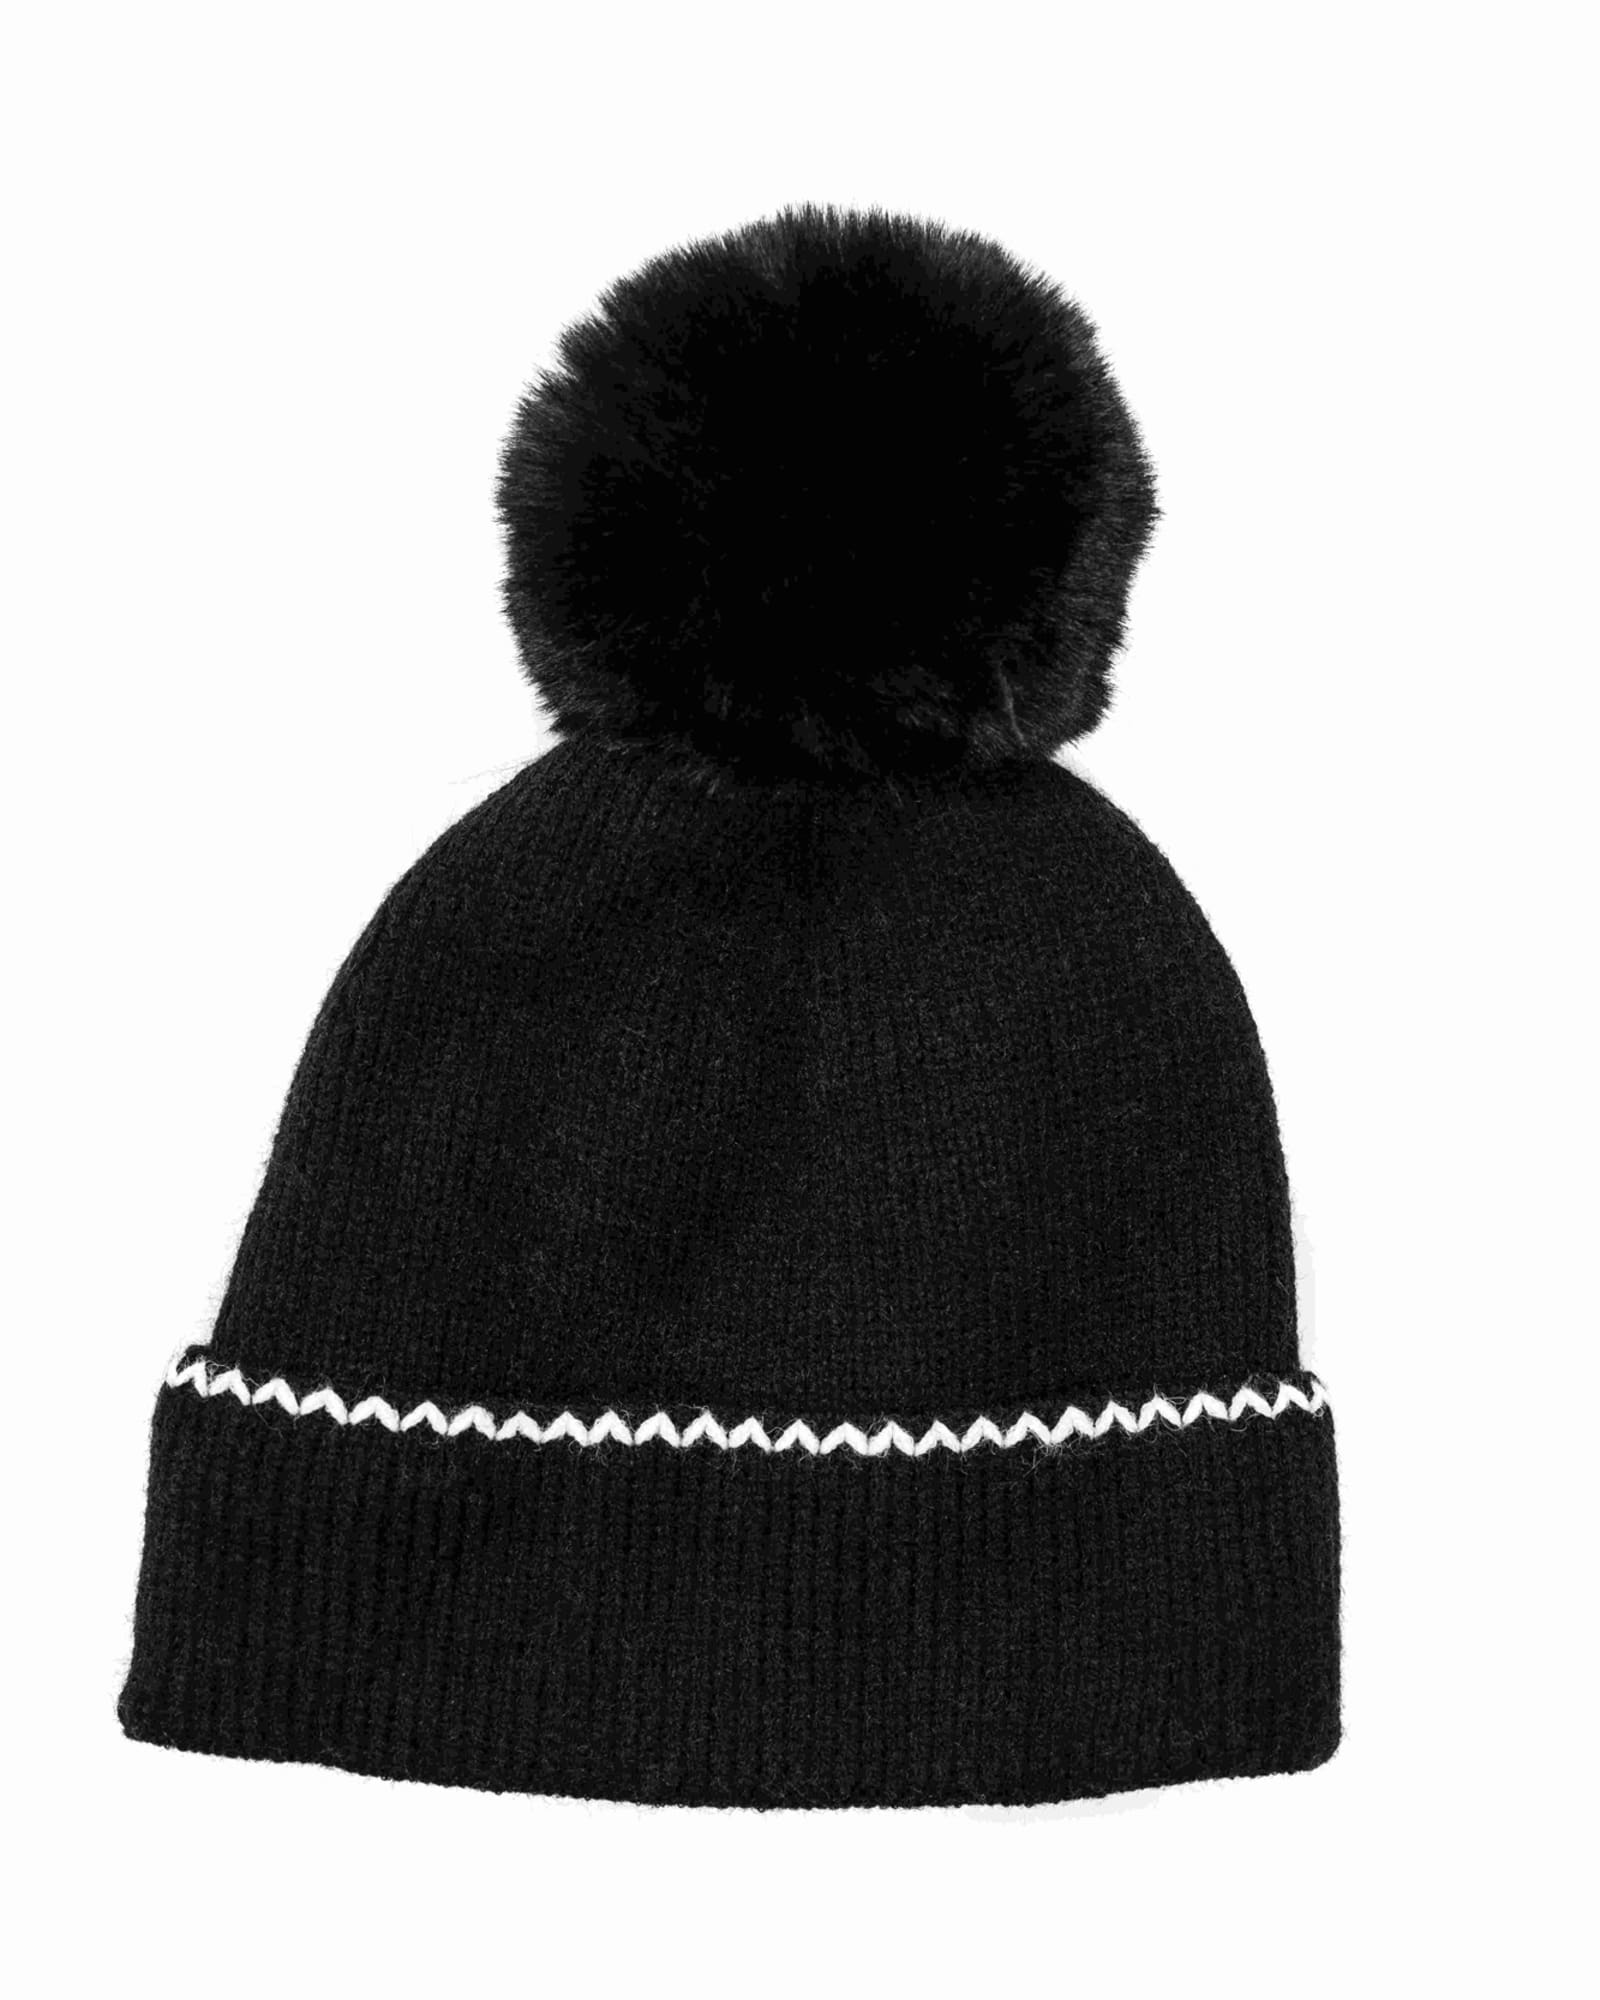 Cozy Winter Hats